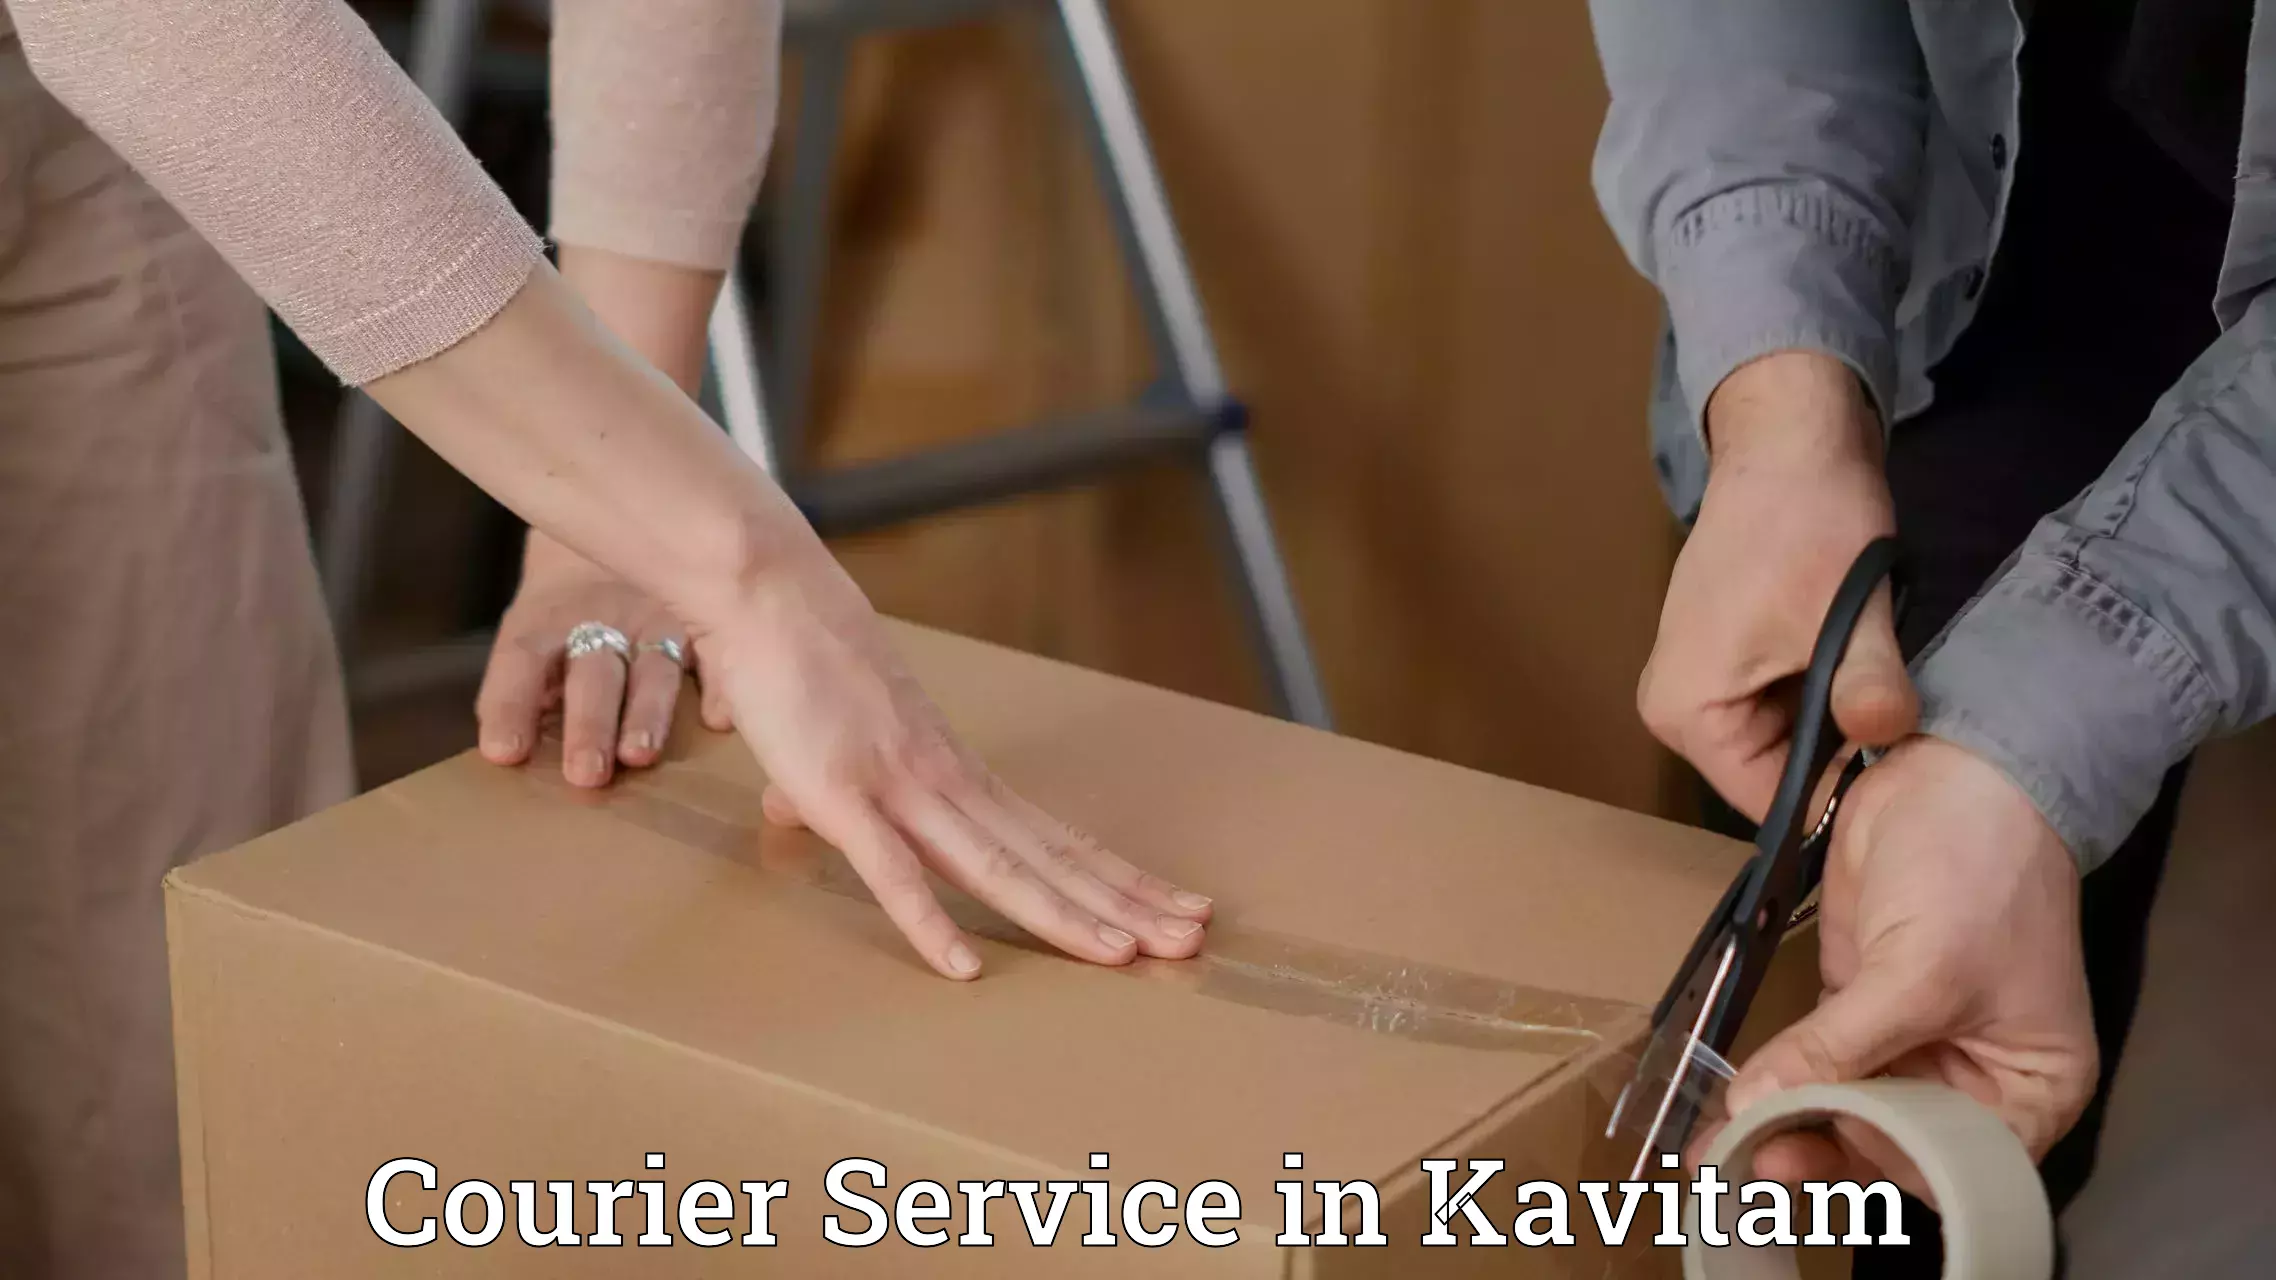 Individual parcel service in Kavitam